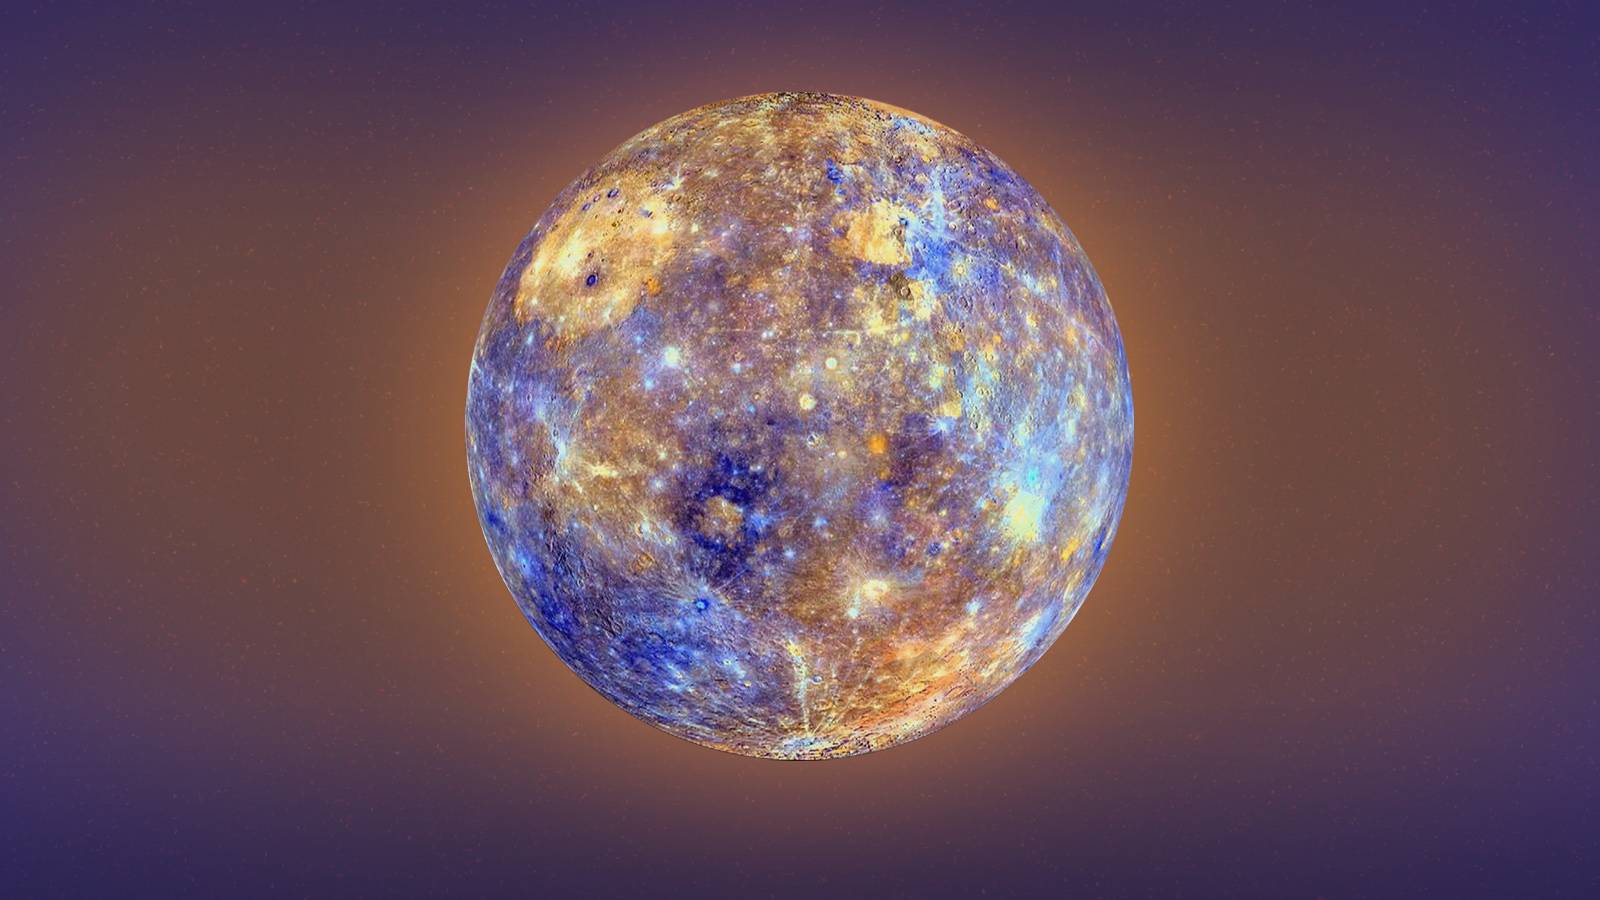 Planeetta Merkurius soi